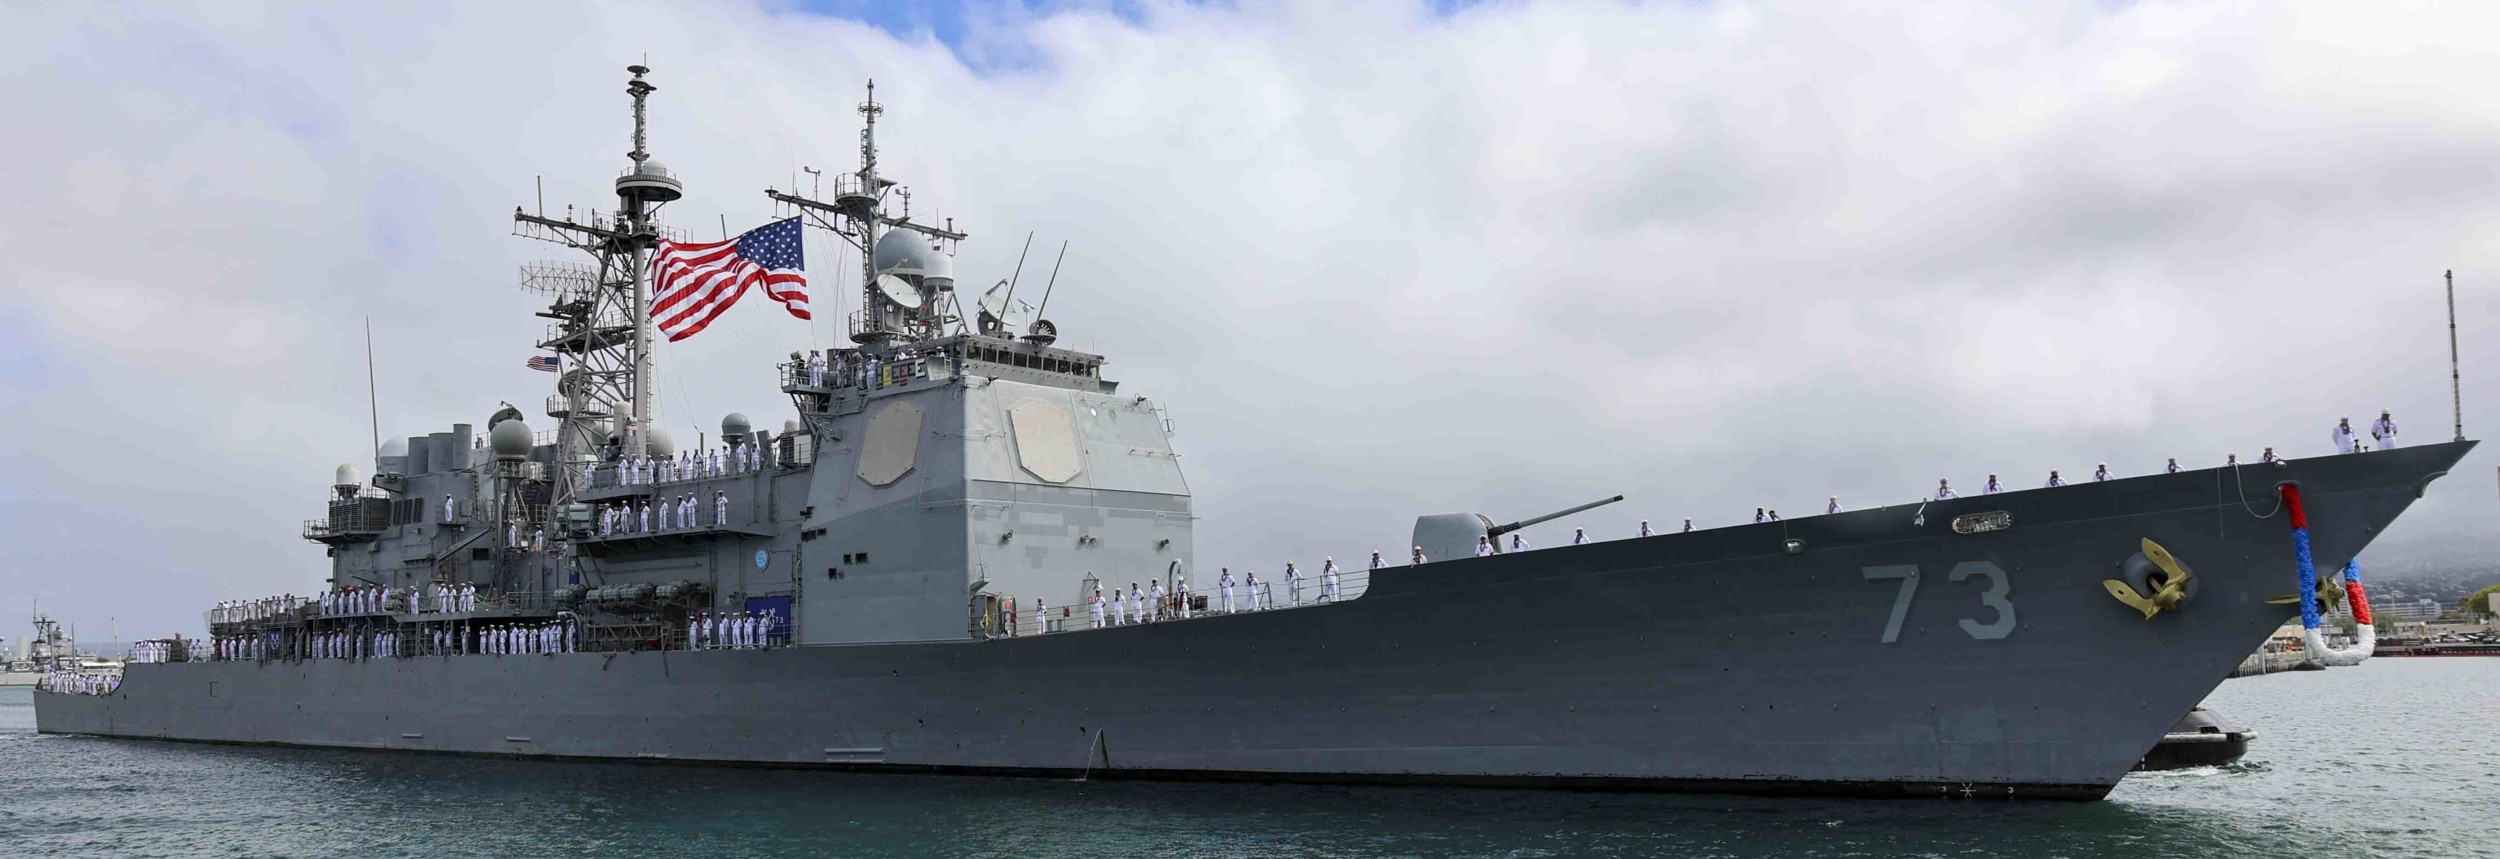 cg-73 uss port royal ticonderoga class guided missile cruiser aegis returning pearl harbor hickam hawaii 70